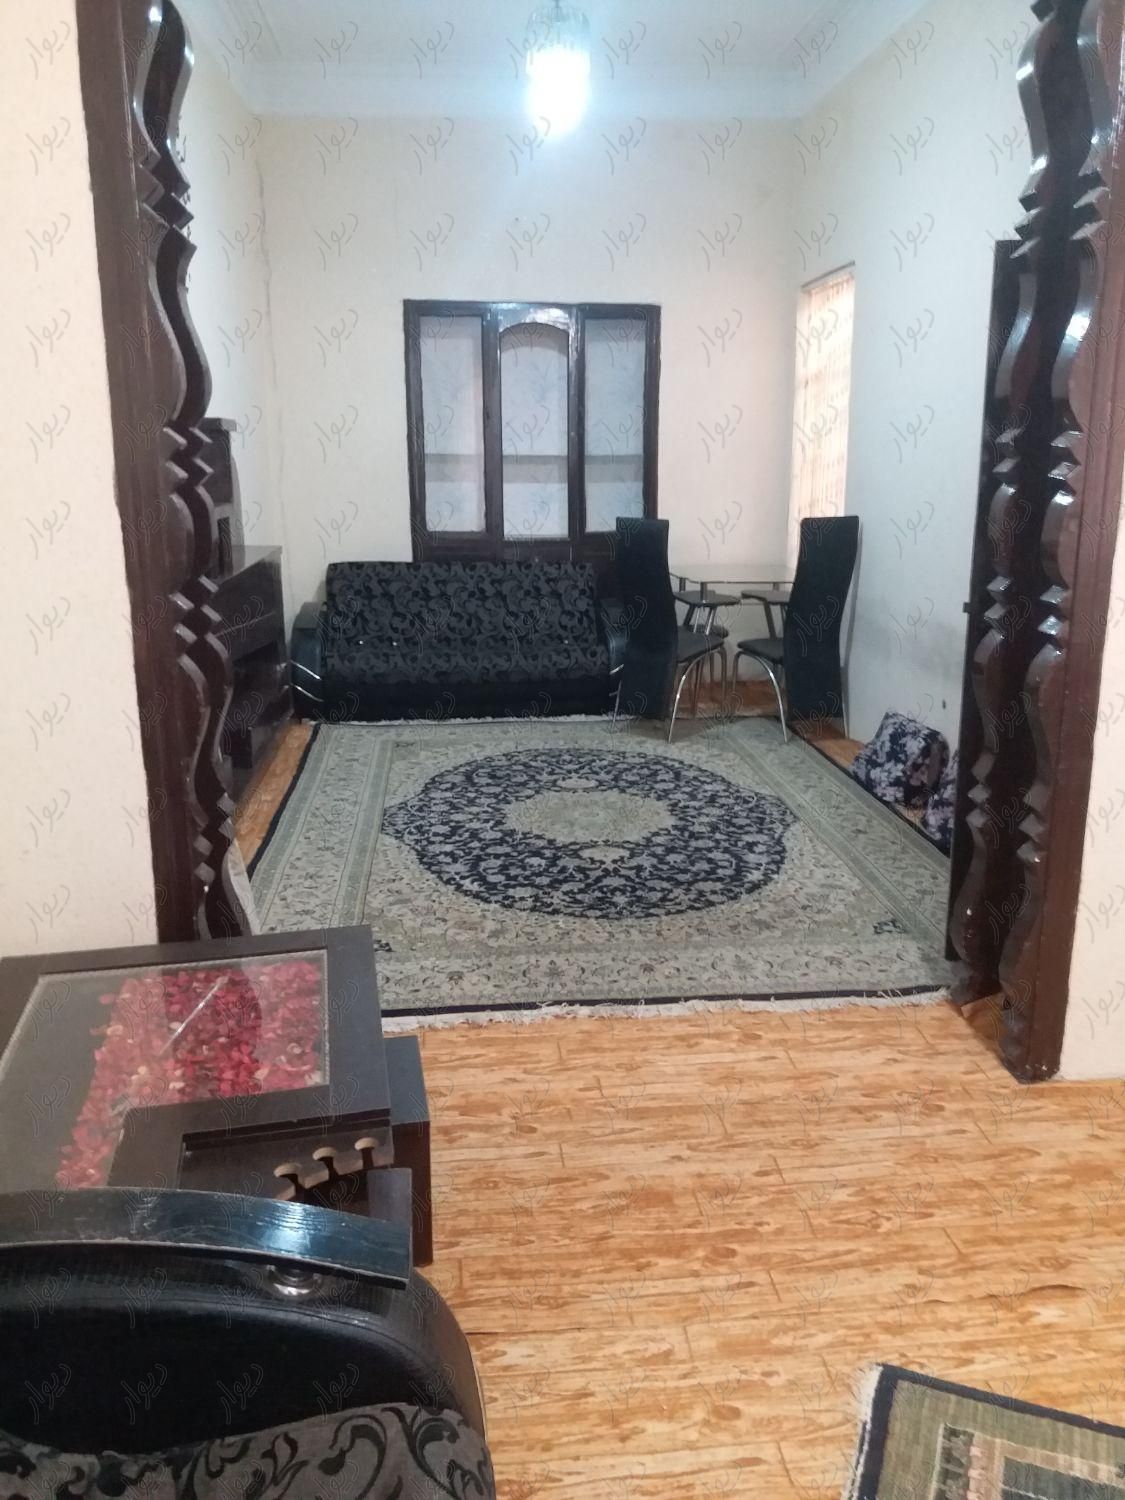 منزل مبله مرکزشهر|اجارهٔ کوتاه مدت آپارتمان و سوئیت|شیراز, وصال|دیوار